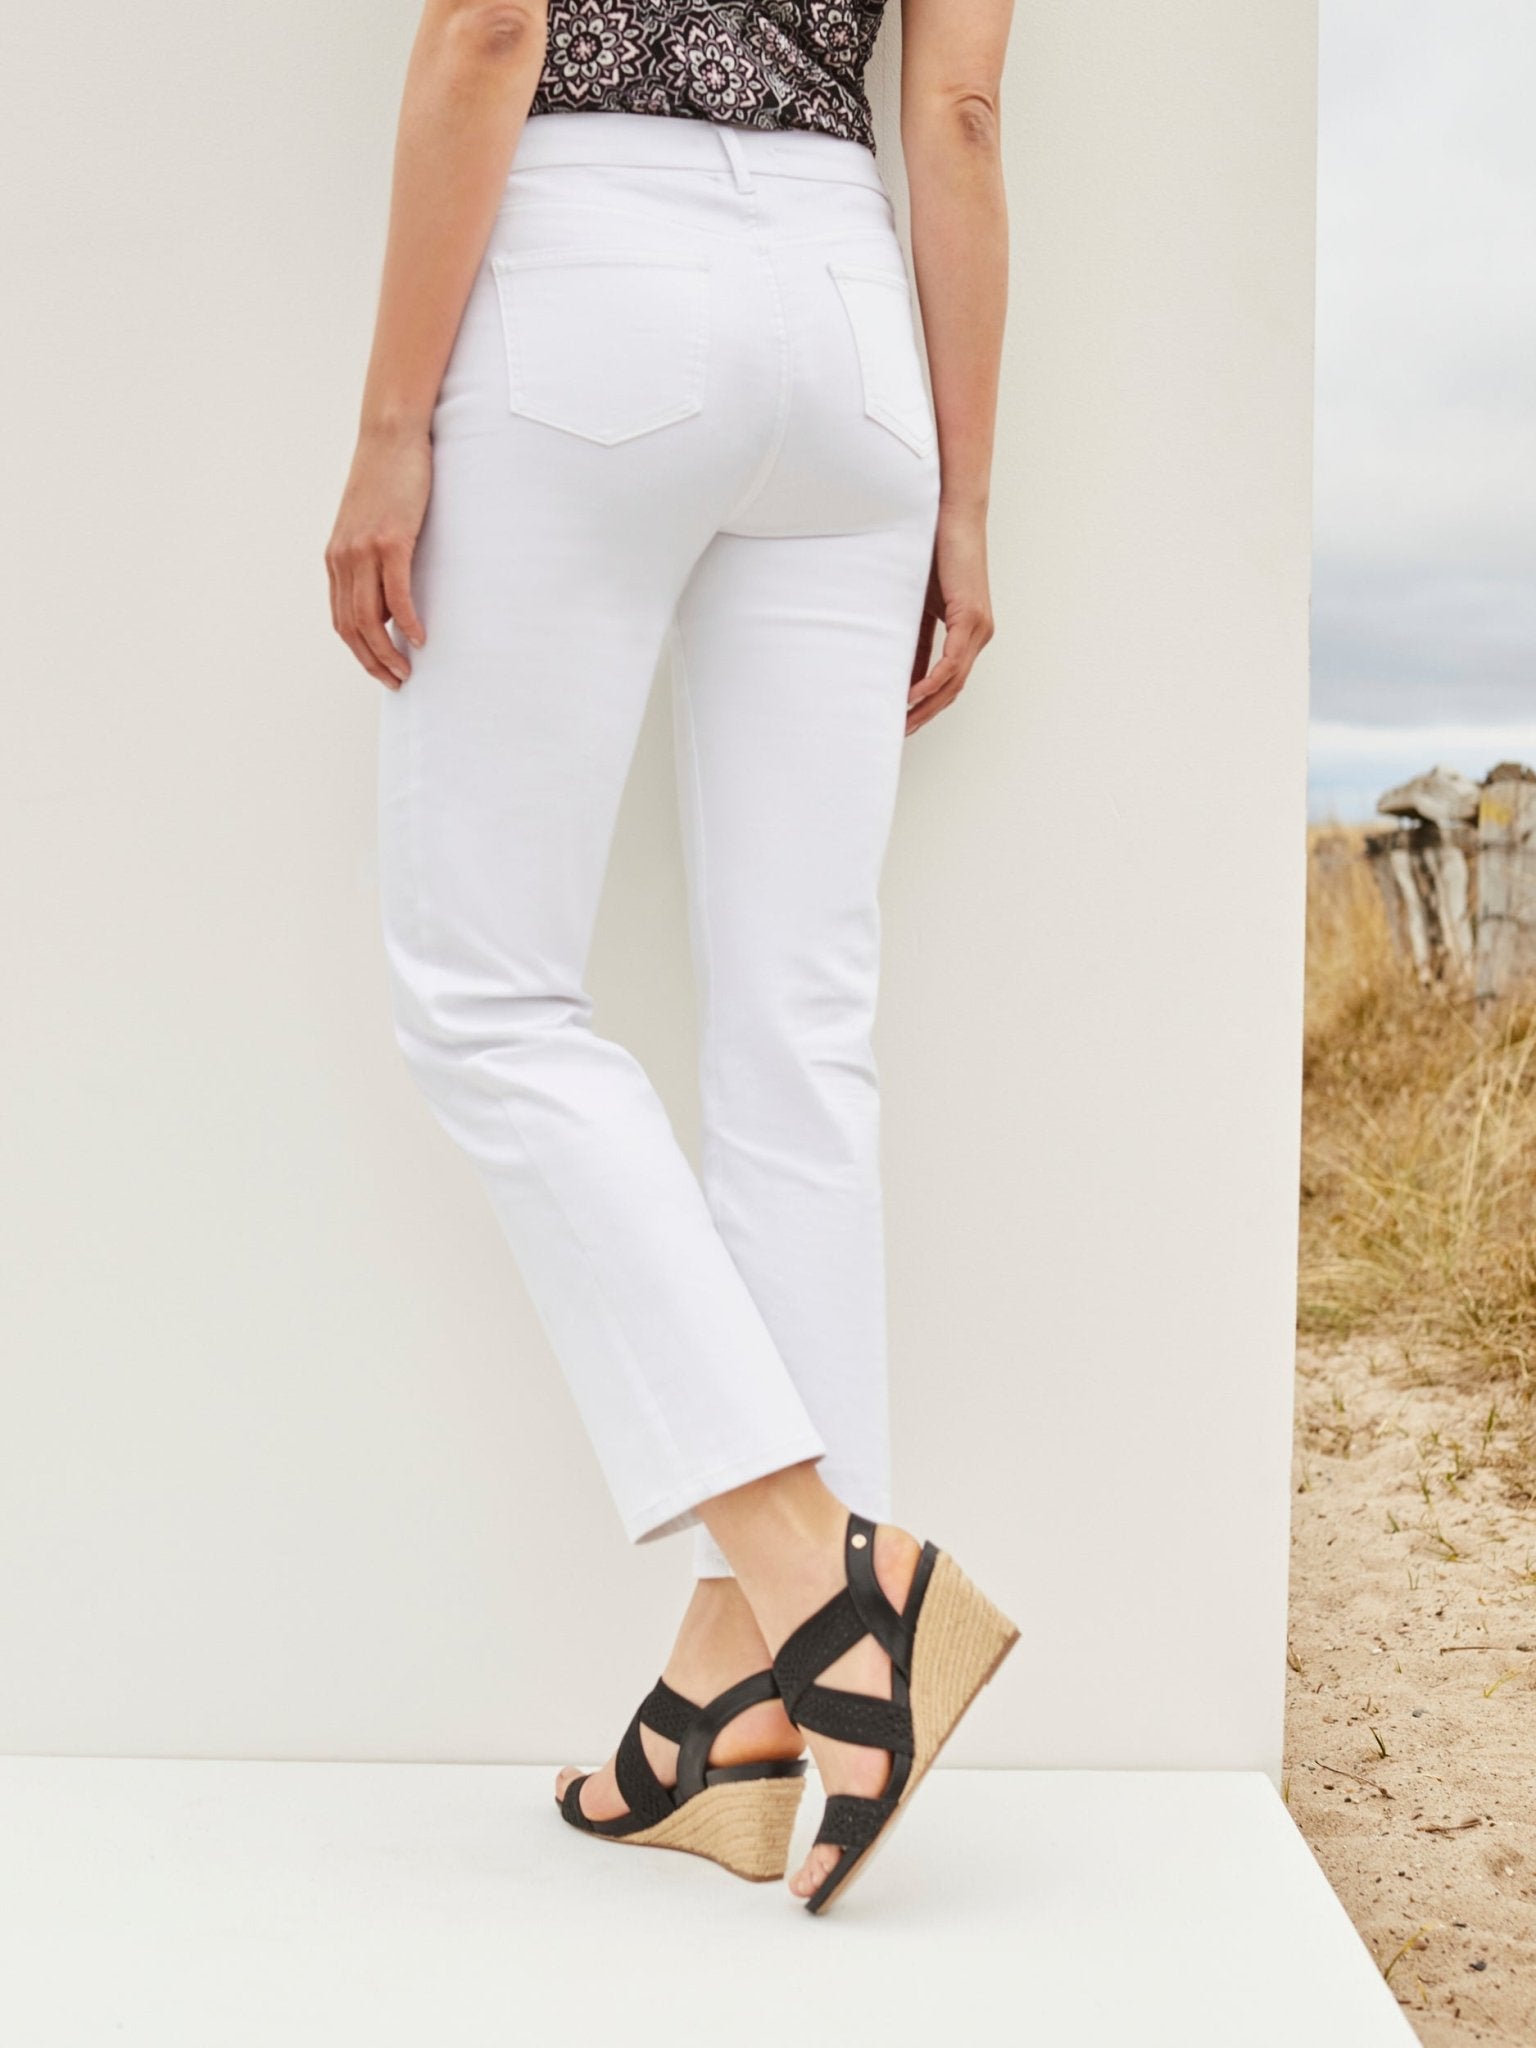 WESTPORT Classic Fit Capri Jeans Womens Size 6 Mid Rise Stretch Denim EUC!